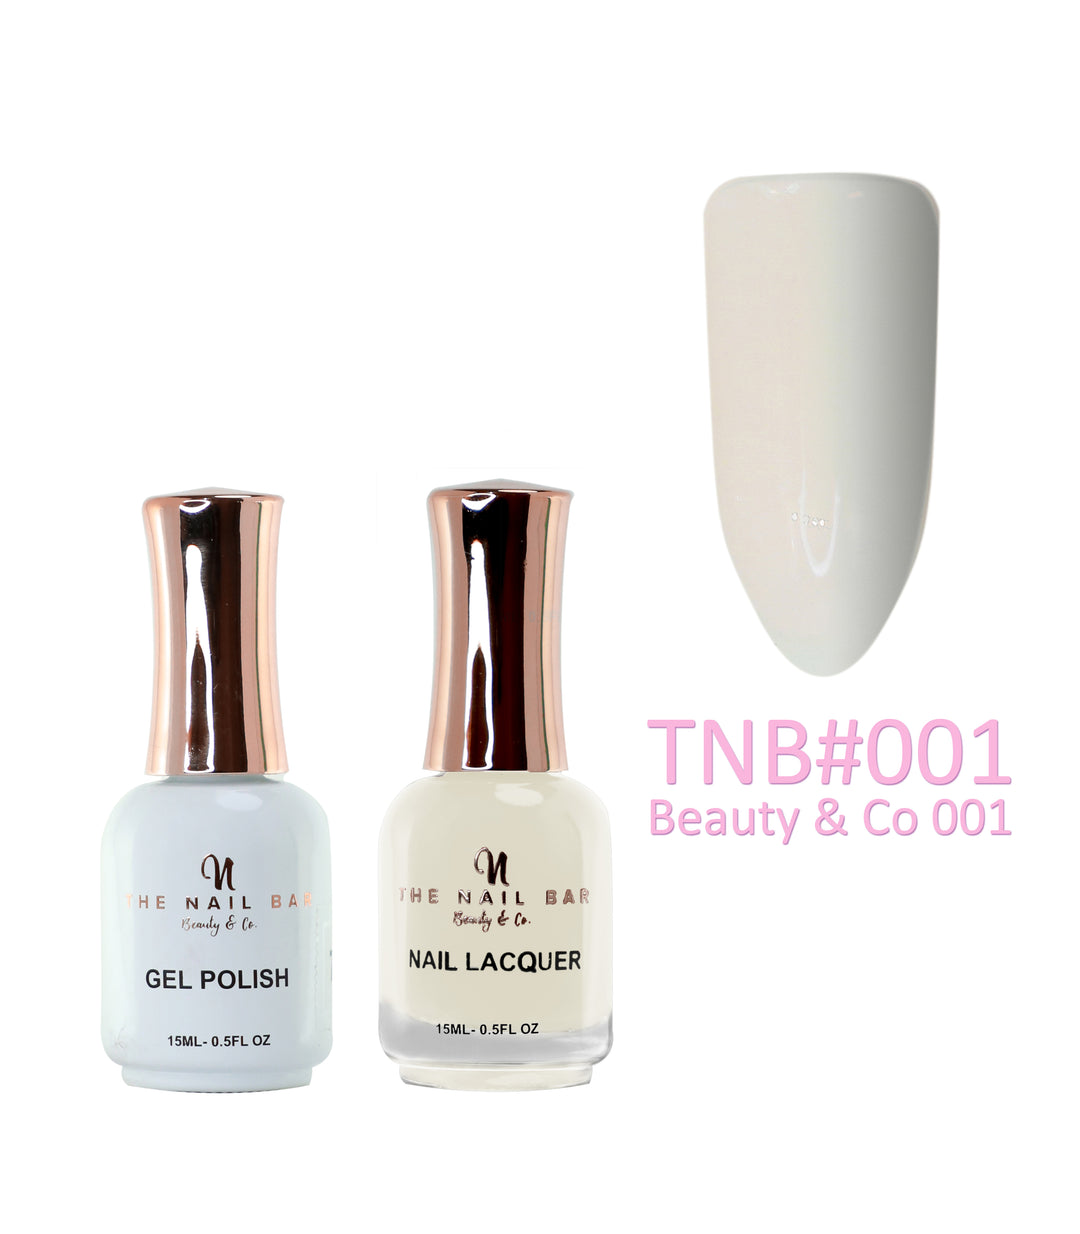 Dual Polish/Gel colour matching (15ml) -  Beauty & Co 001 - The Nail Bar Beauty & Co.